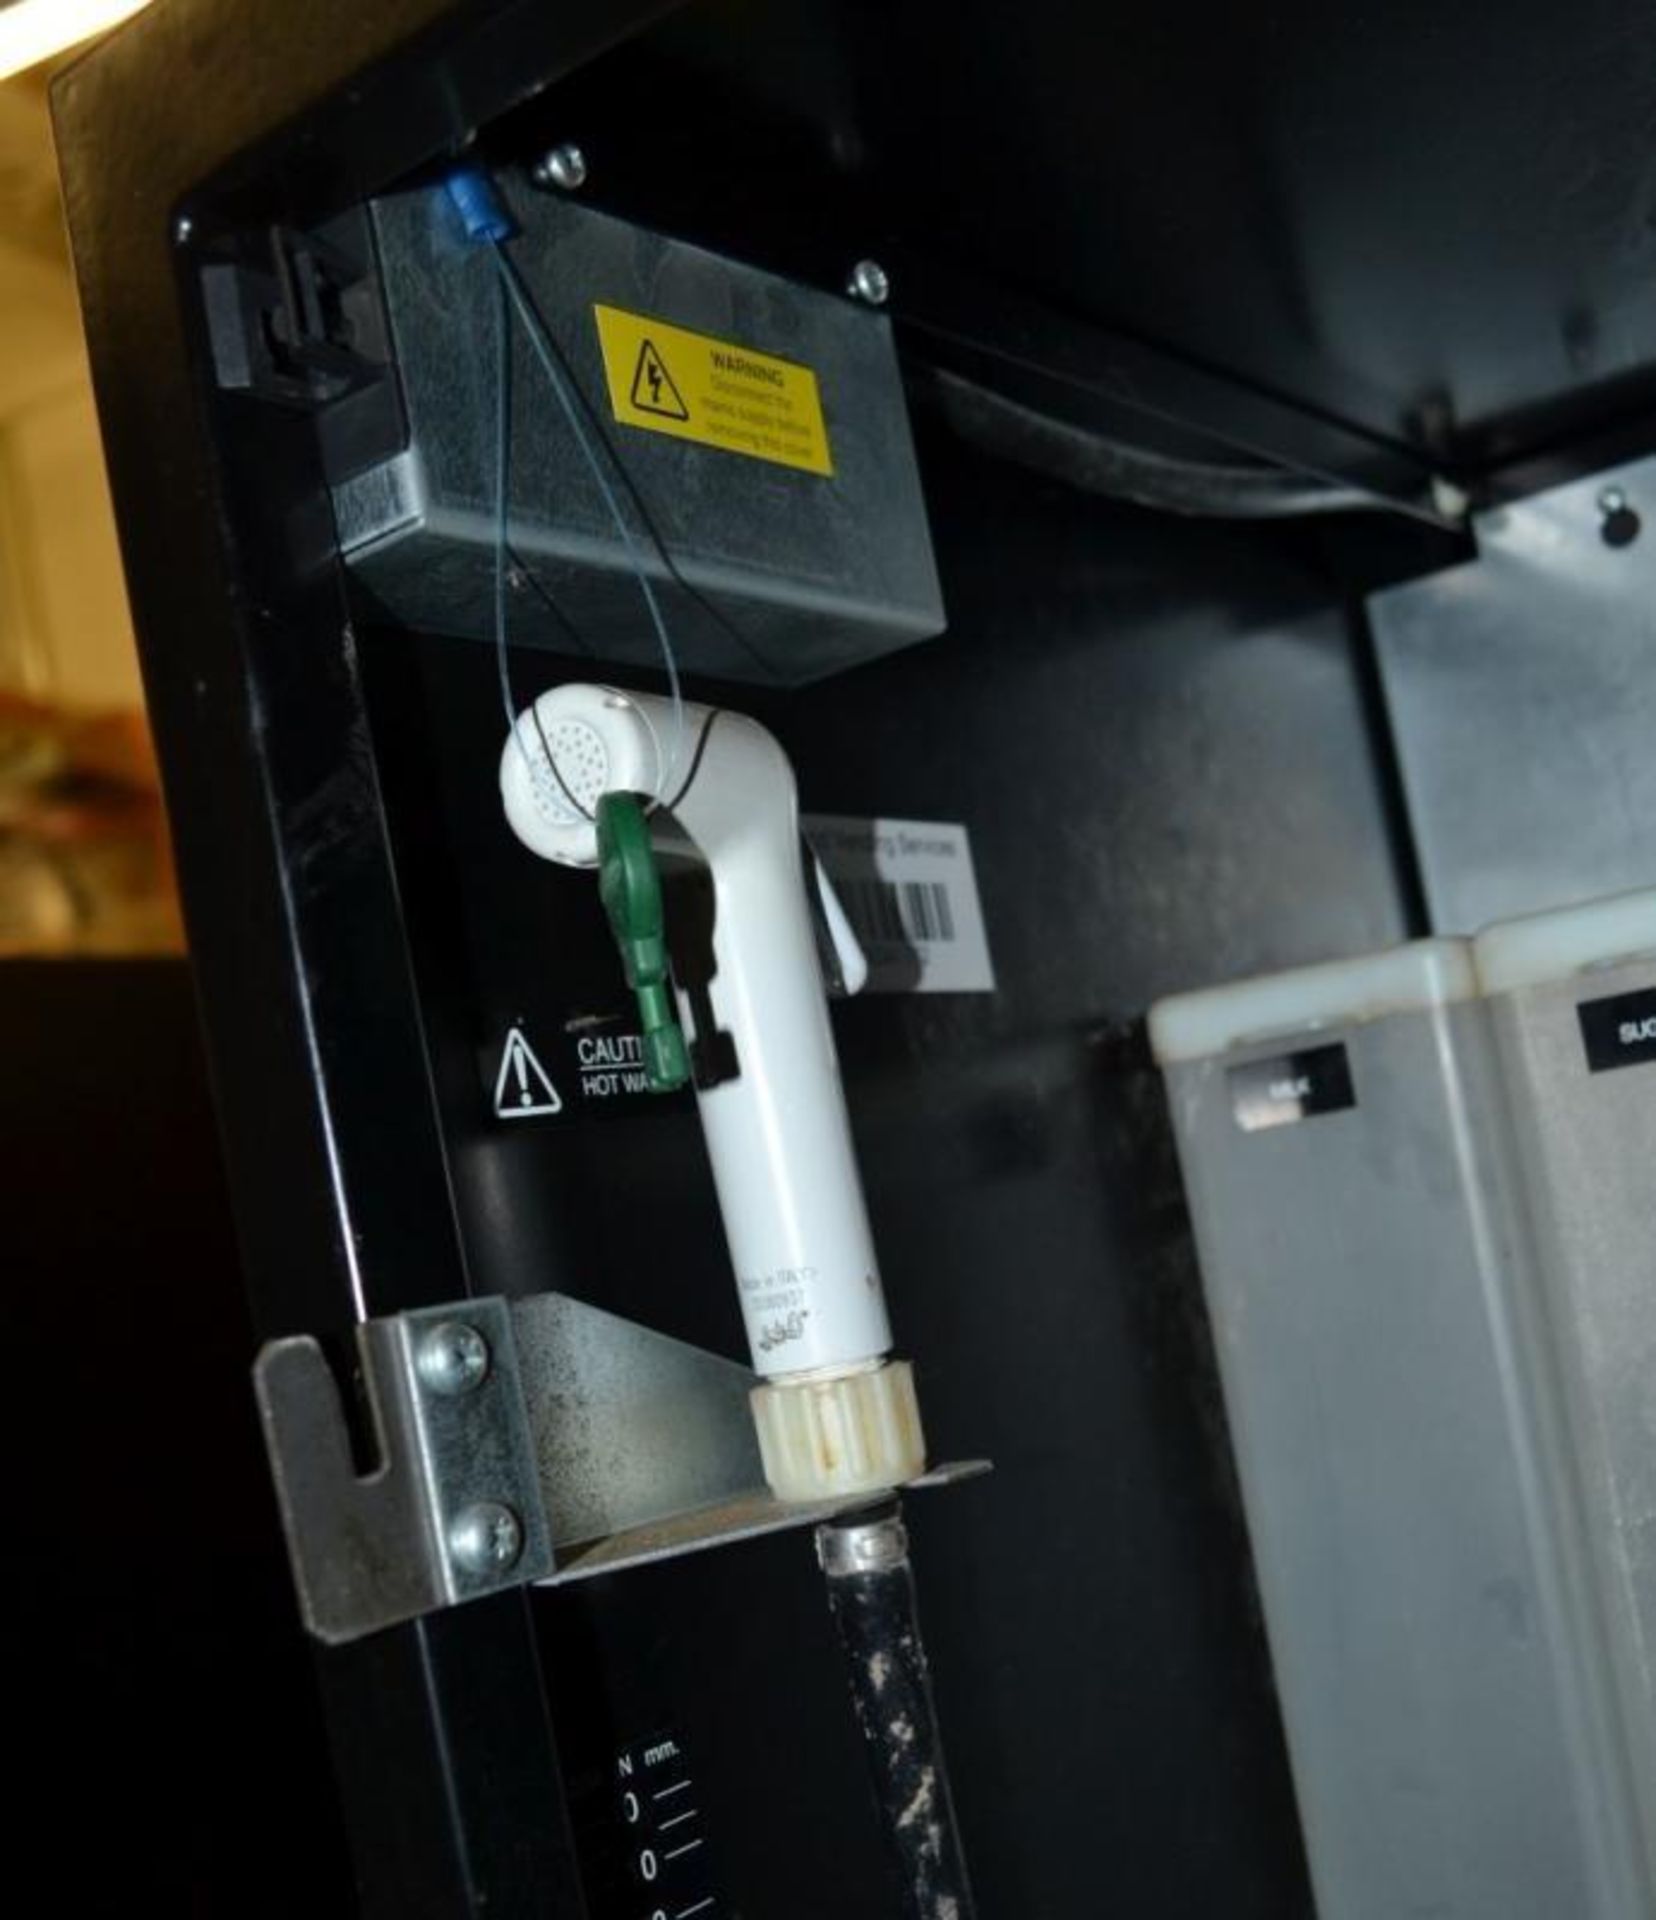 1 x Crane "Evolution" Hot Beverage Drinks Vending Machine With Keys - Year: 2009 - Recently Taken Fr - Image 10 of 17